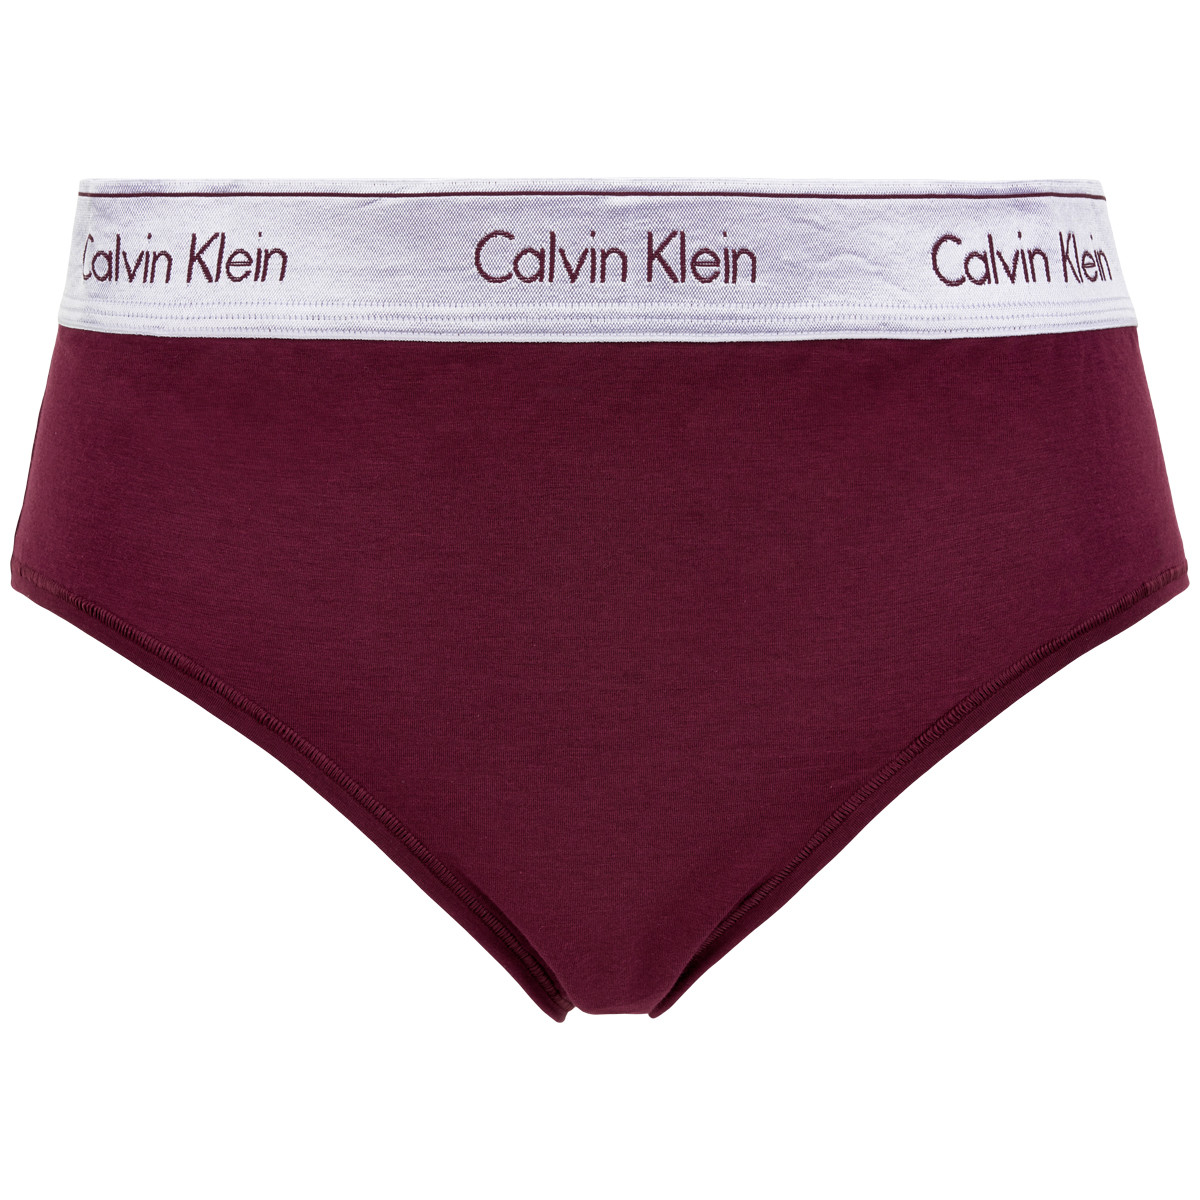 Calvin Klein Lingeri Tai Fe Wbw, Farve: Rød, Størrelse: 2XL, Dame